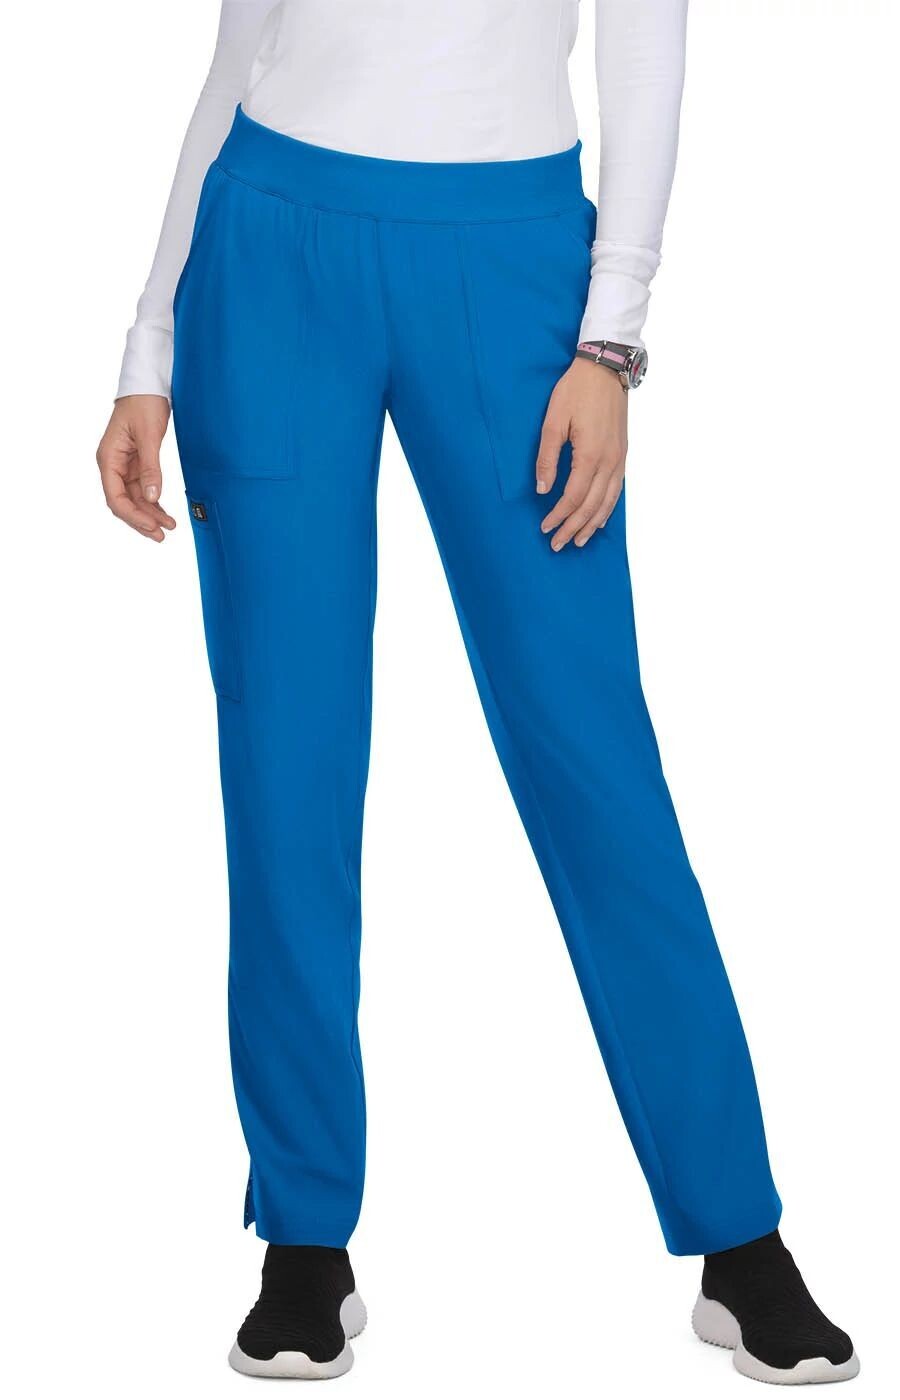 Pantalone KOI BASICS CAROLINE Donna Colore 20. Royal Blue